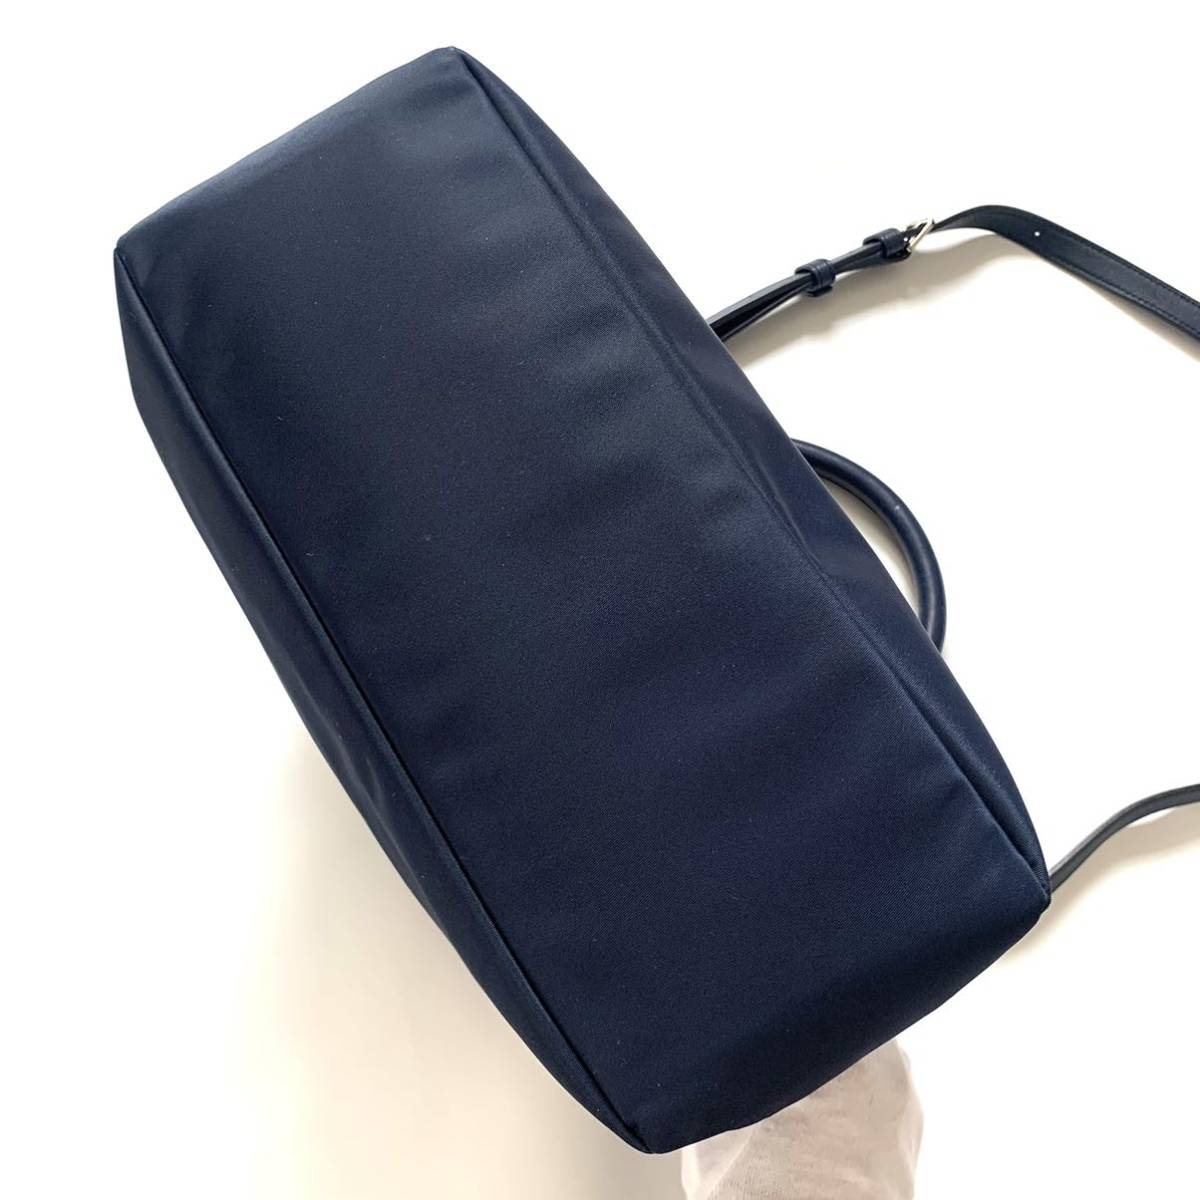 [ free shipping ]agnes b. Agnes B nylon leather 2way shoulder bag navy navy blue color handbag leather bag 